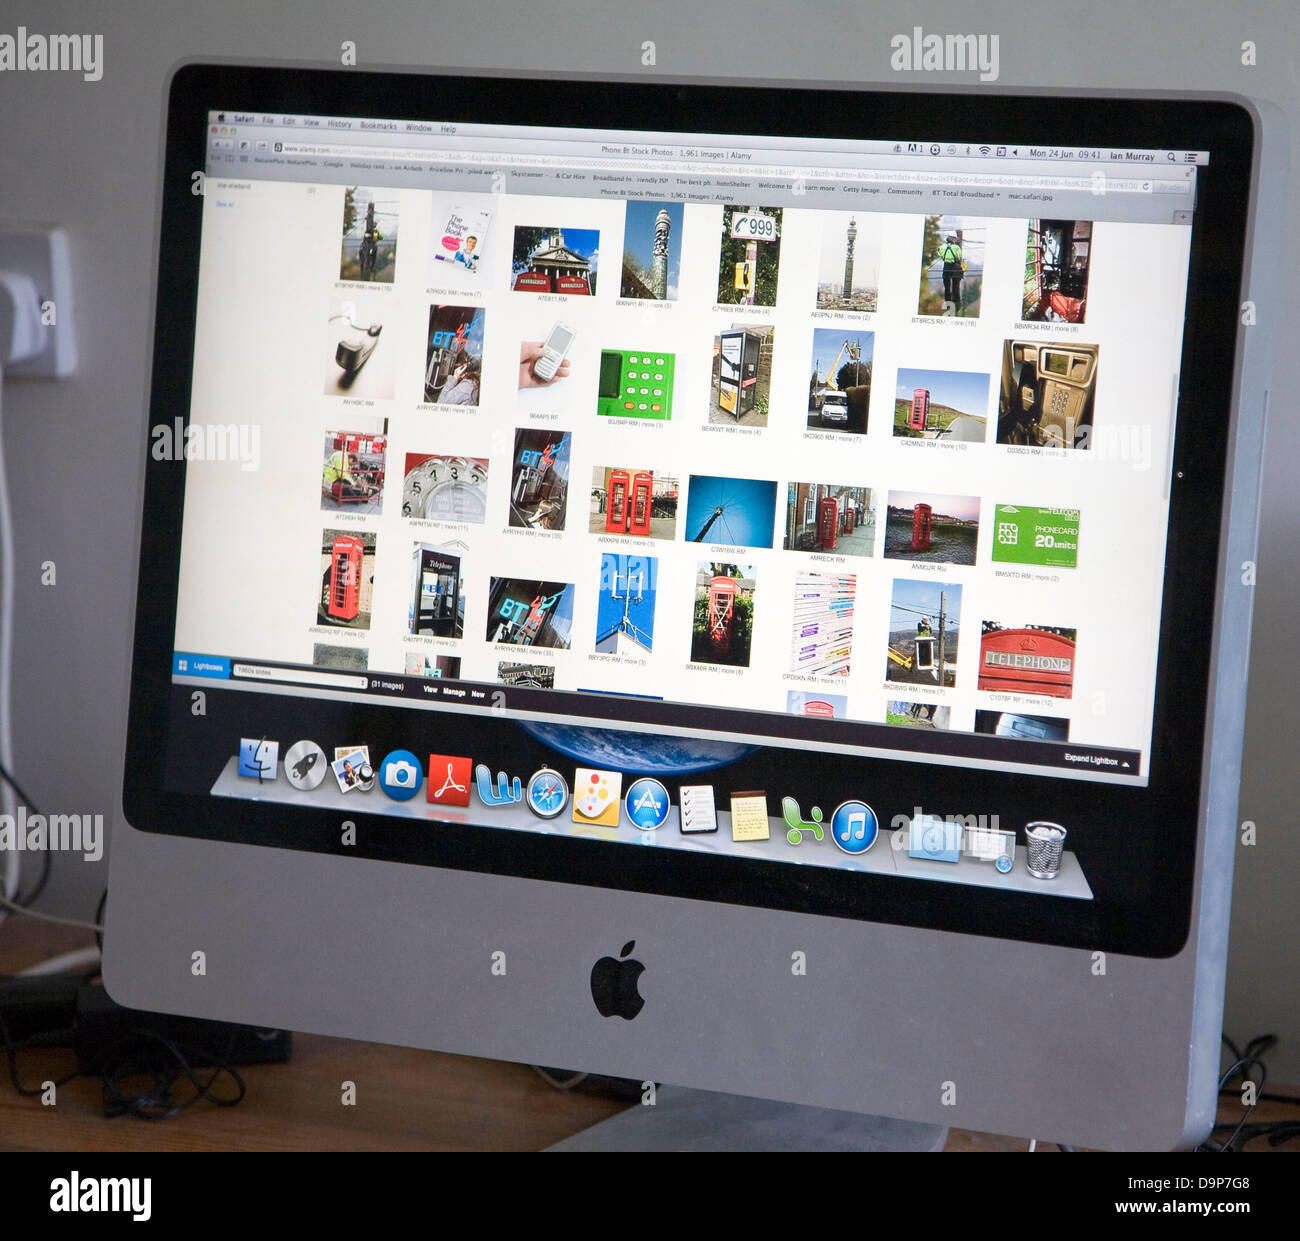 iMac screen display of Alamy stock photograph thumbnail images Stock Photo